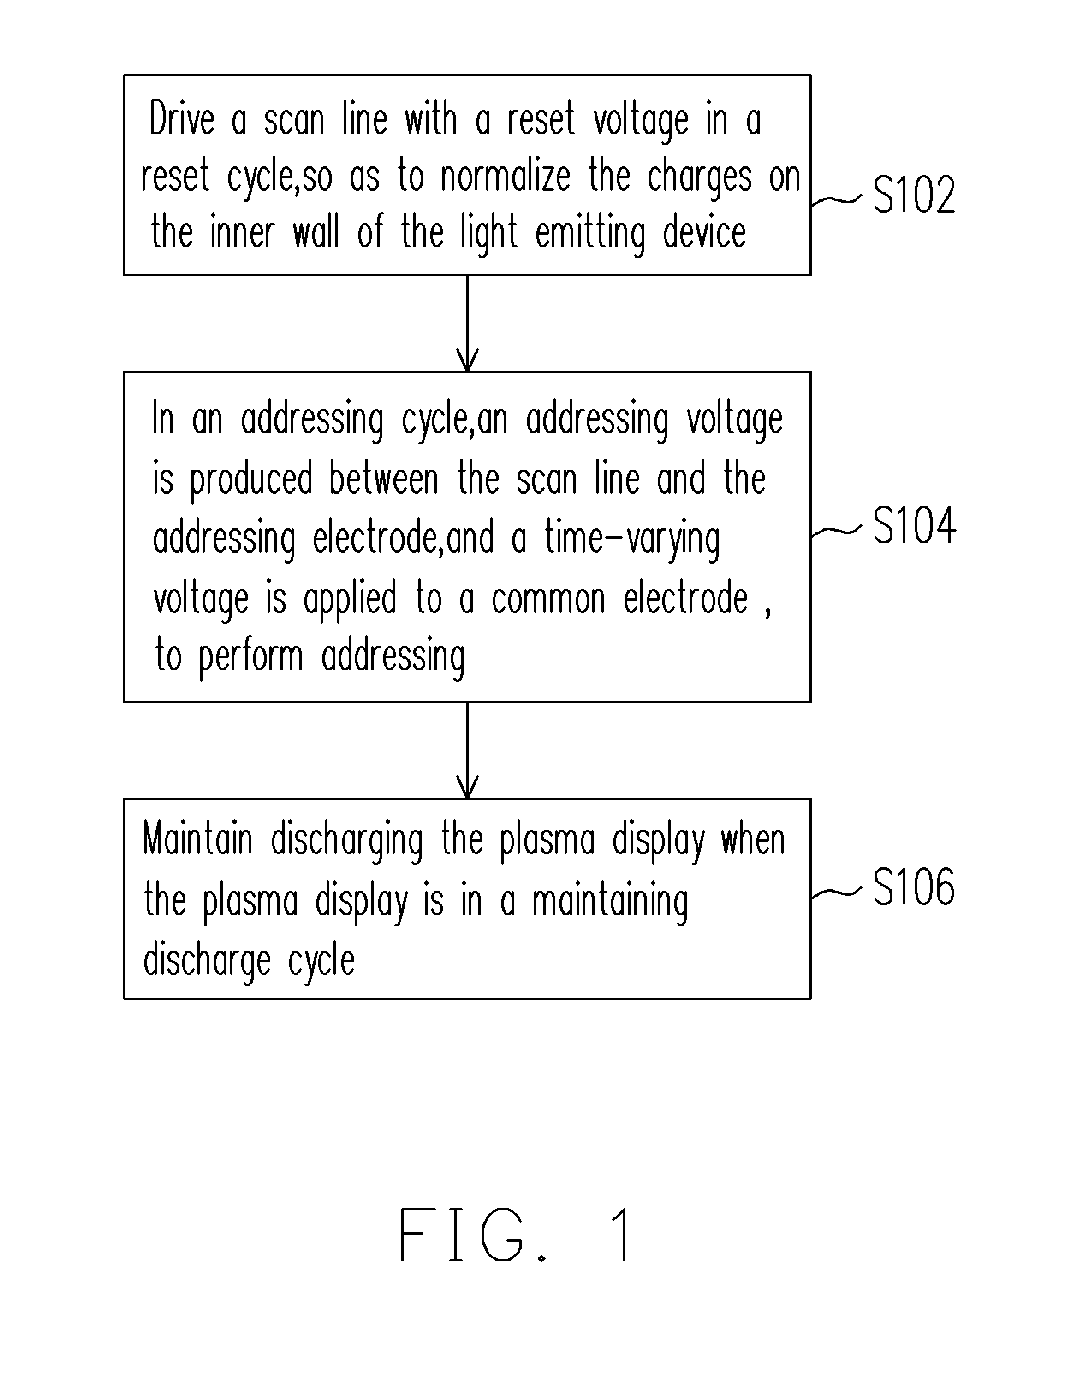 Write-in driving method for plasma display